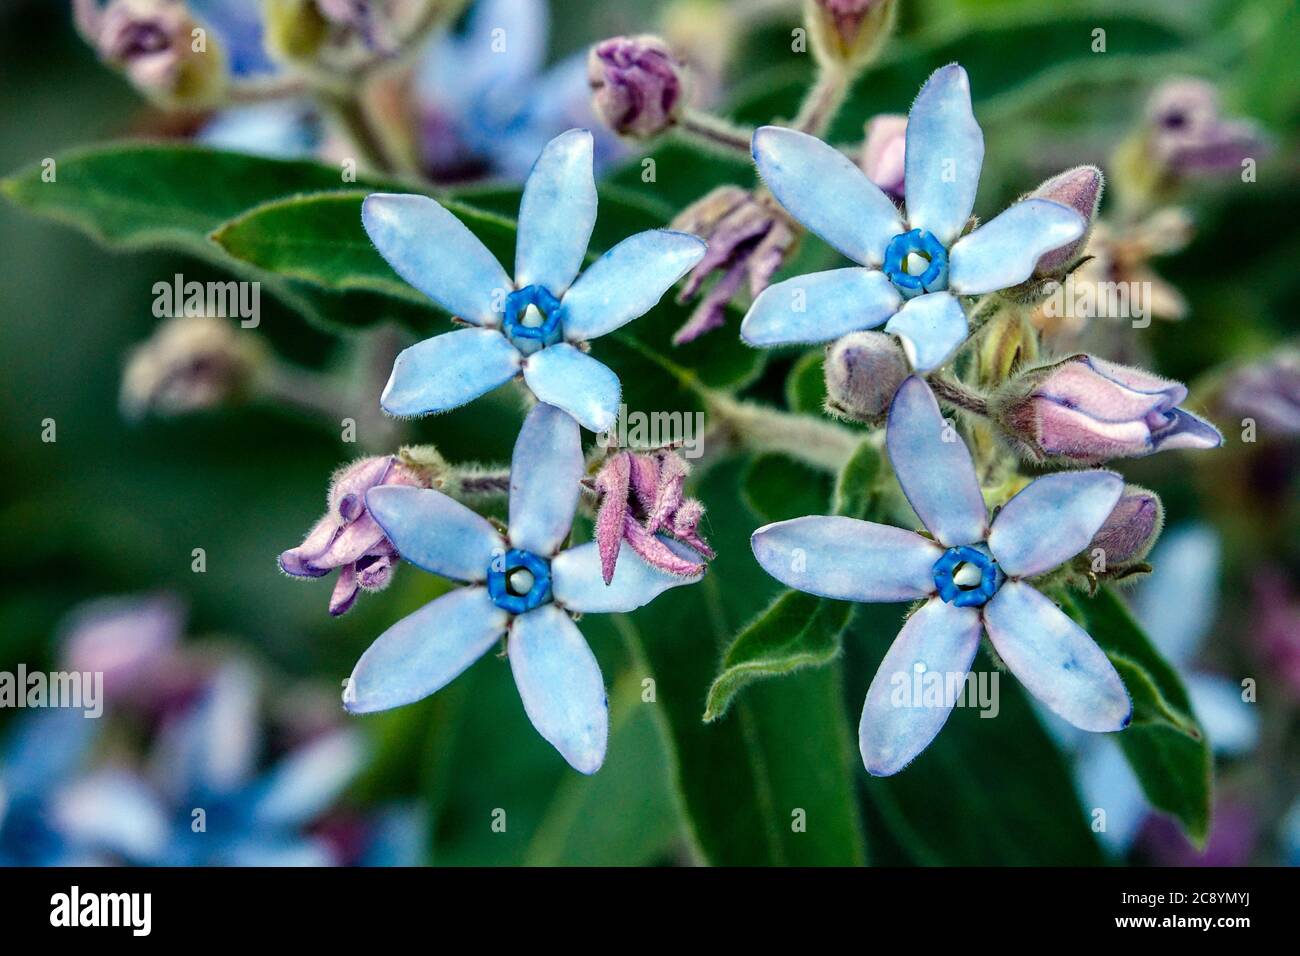 Blue Oxypetalum coeruleum blooming flowers close up Stock Photo